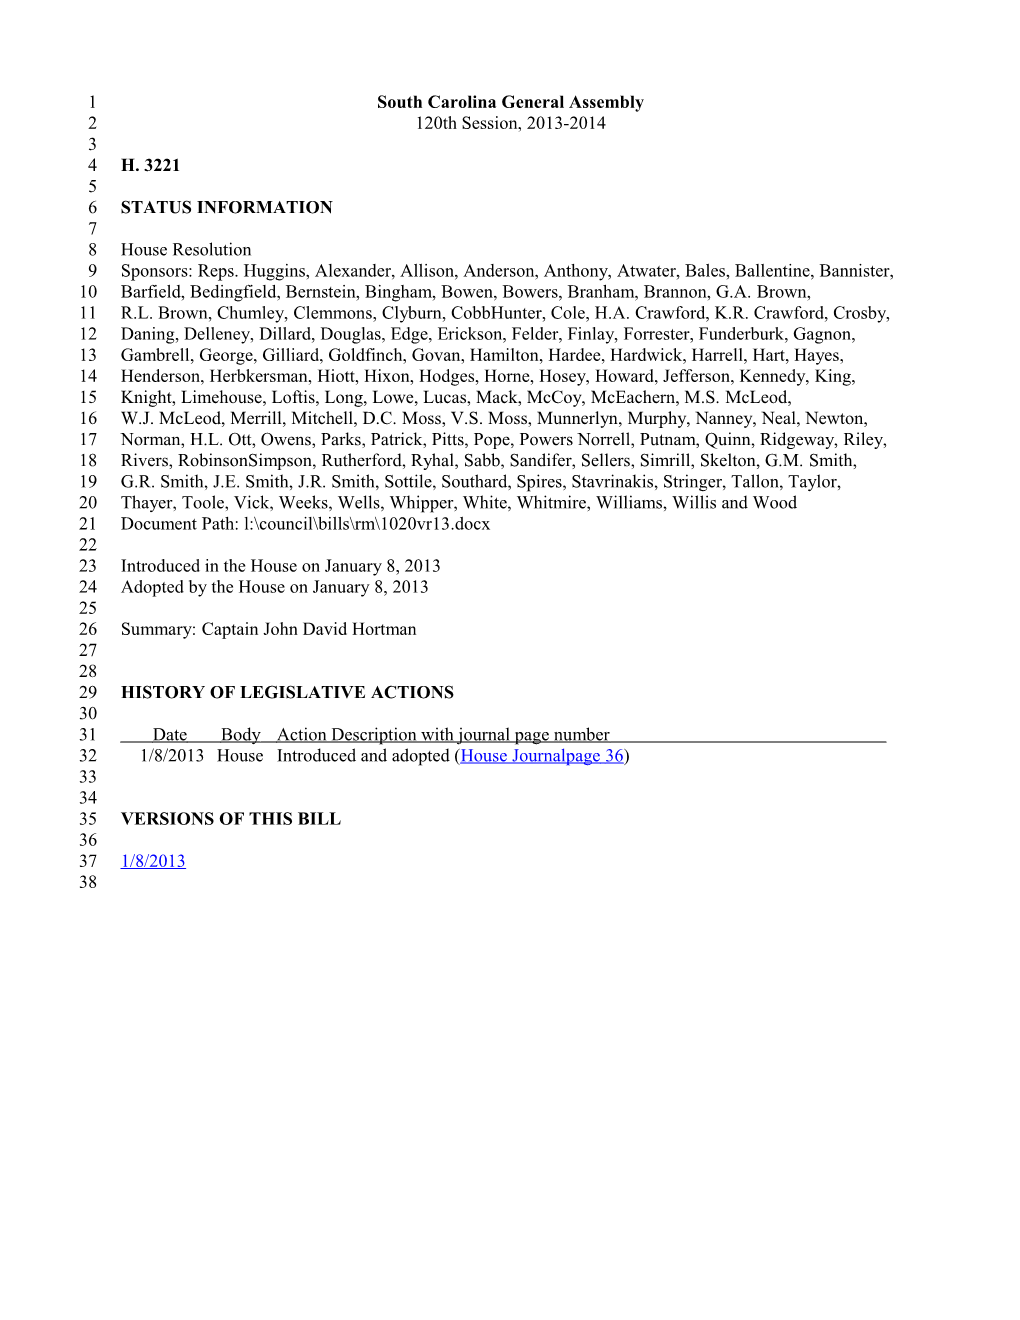 2013-2014 Bill 3221: Captain John David Hortman - South Carolina Legislature Online